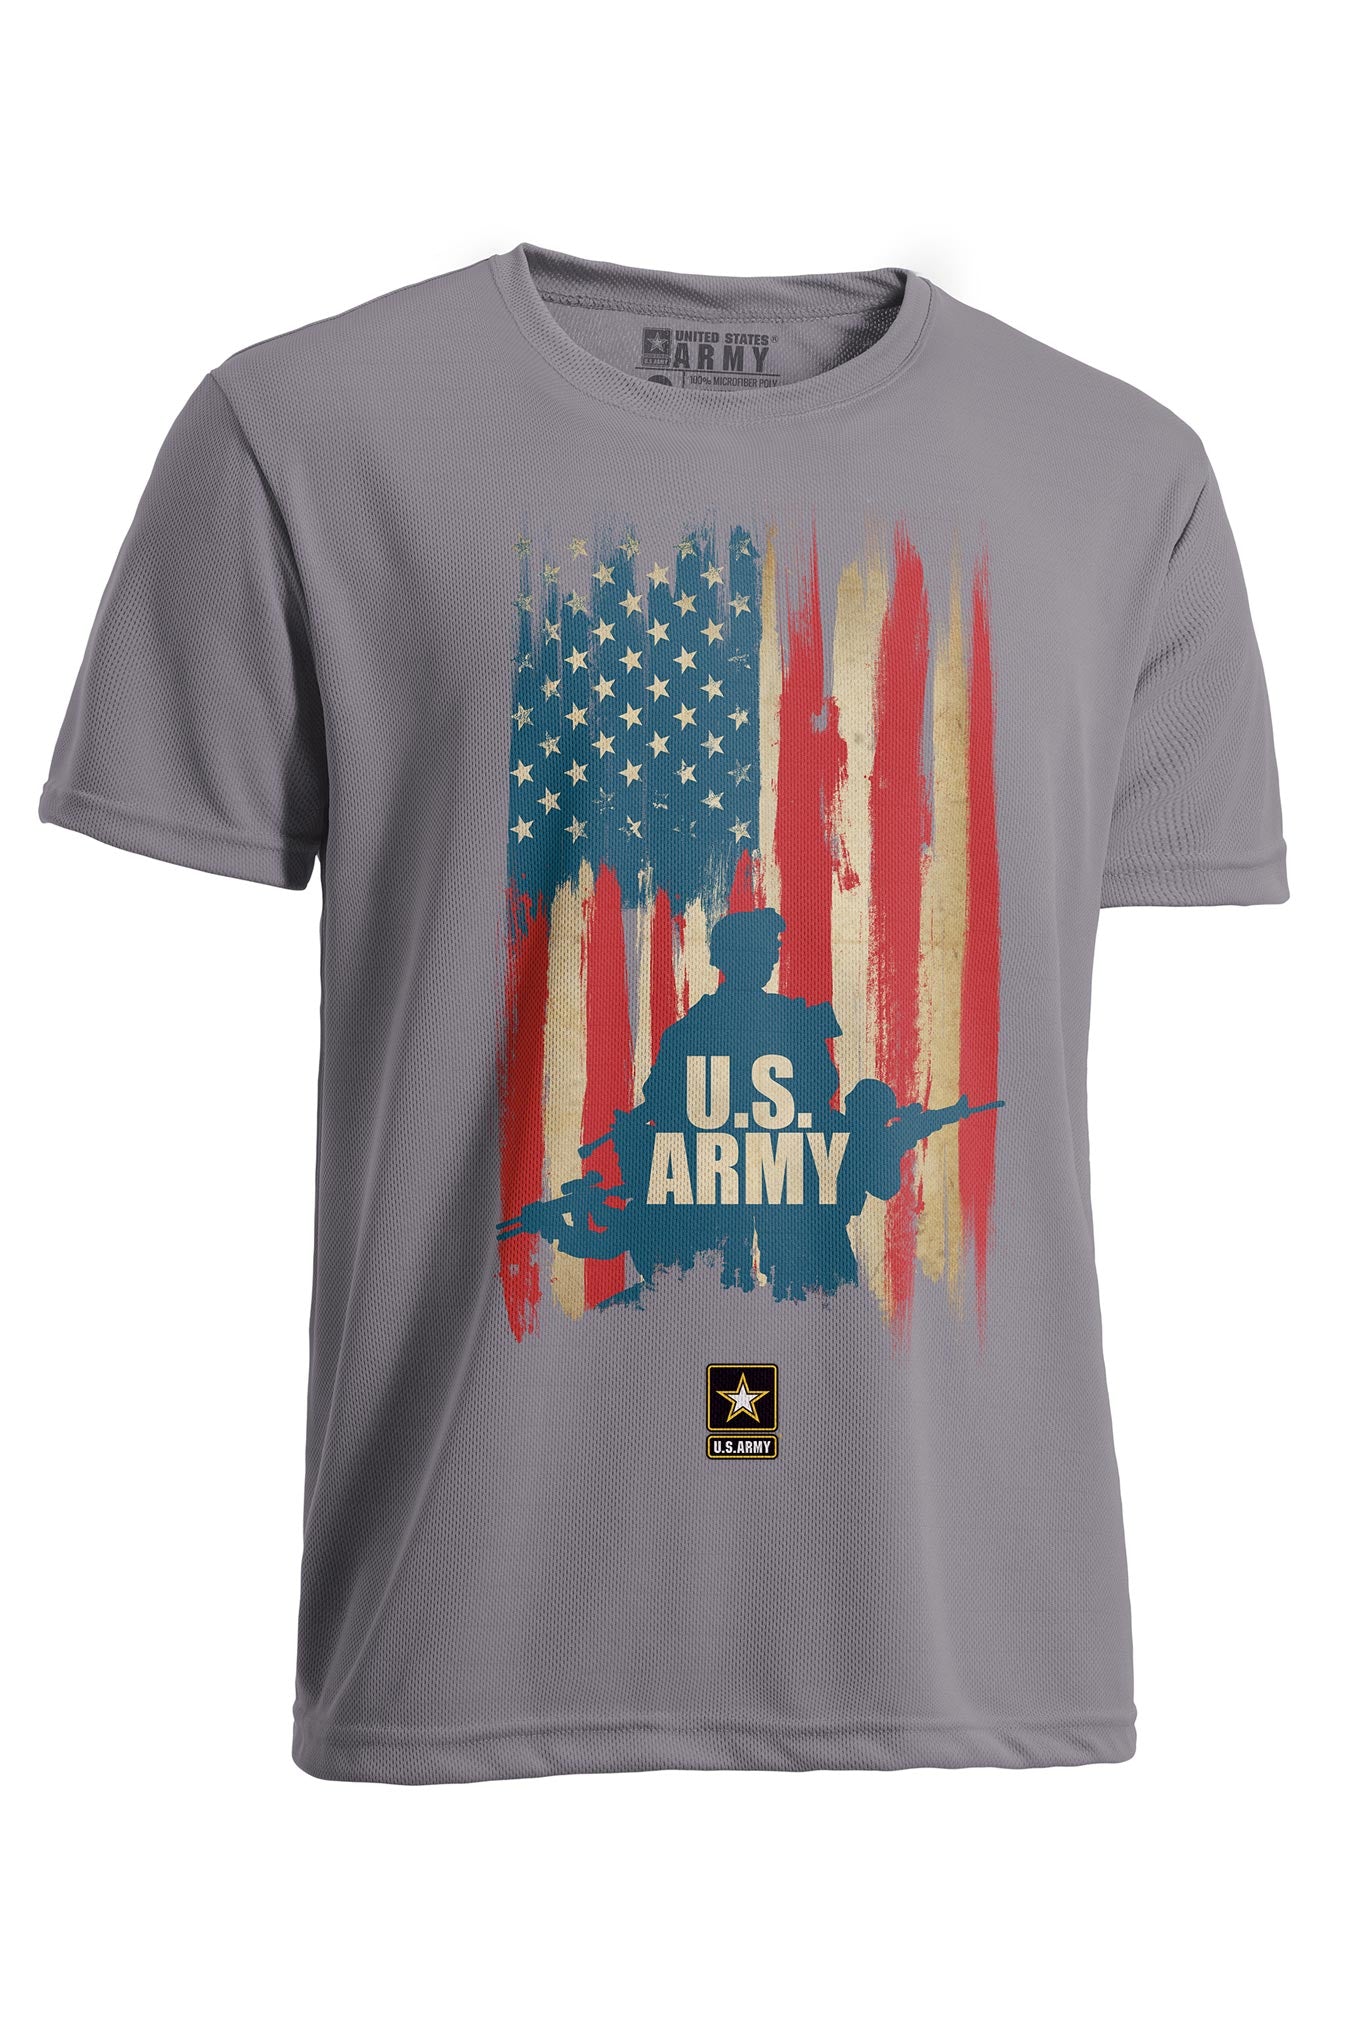 Army Flag Oxymesh™ Performance T-Shirt 🇺🇸 - Expert Brand Apparel